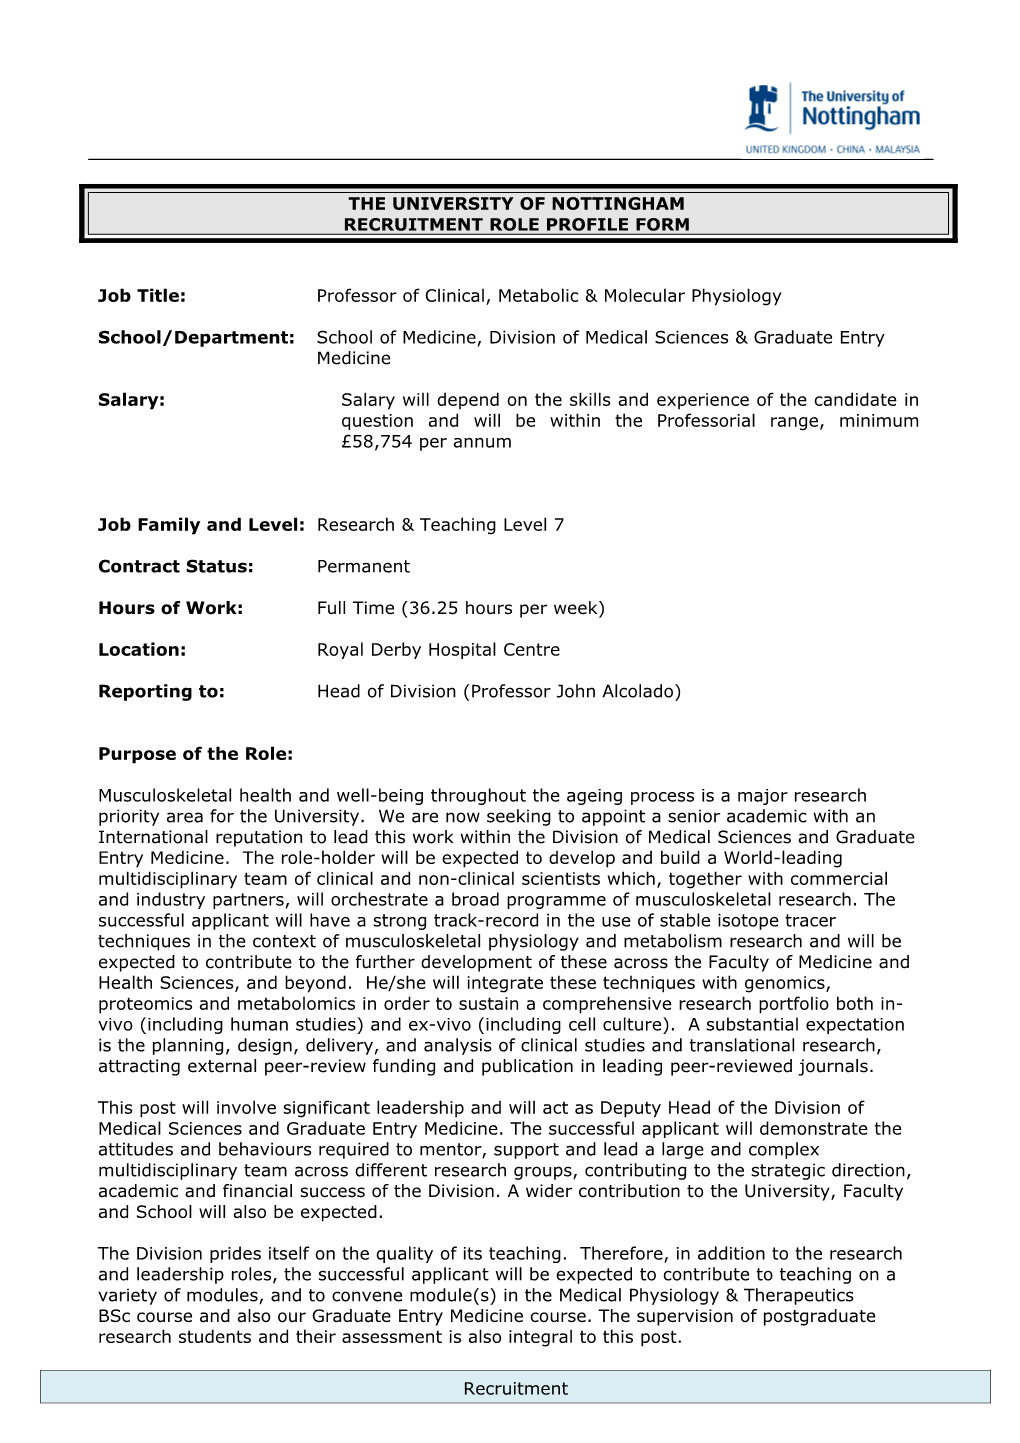 Job Title:Professorofclinical, Metabolic & Molecular Physiology